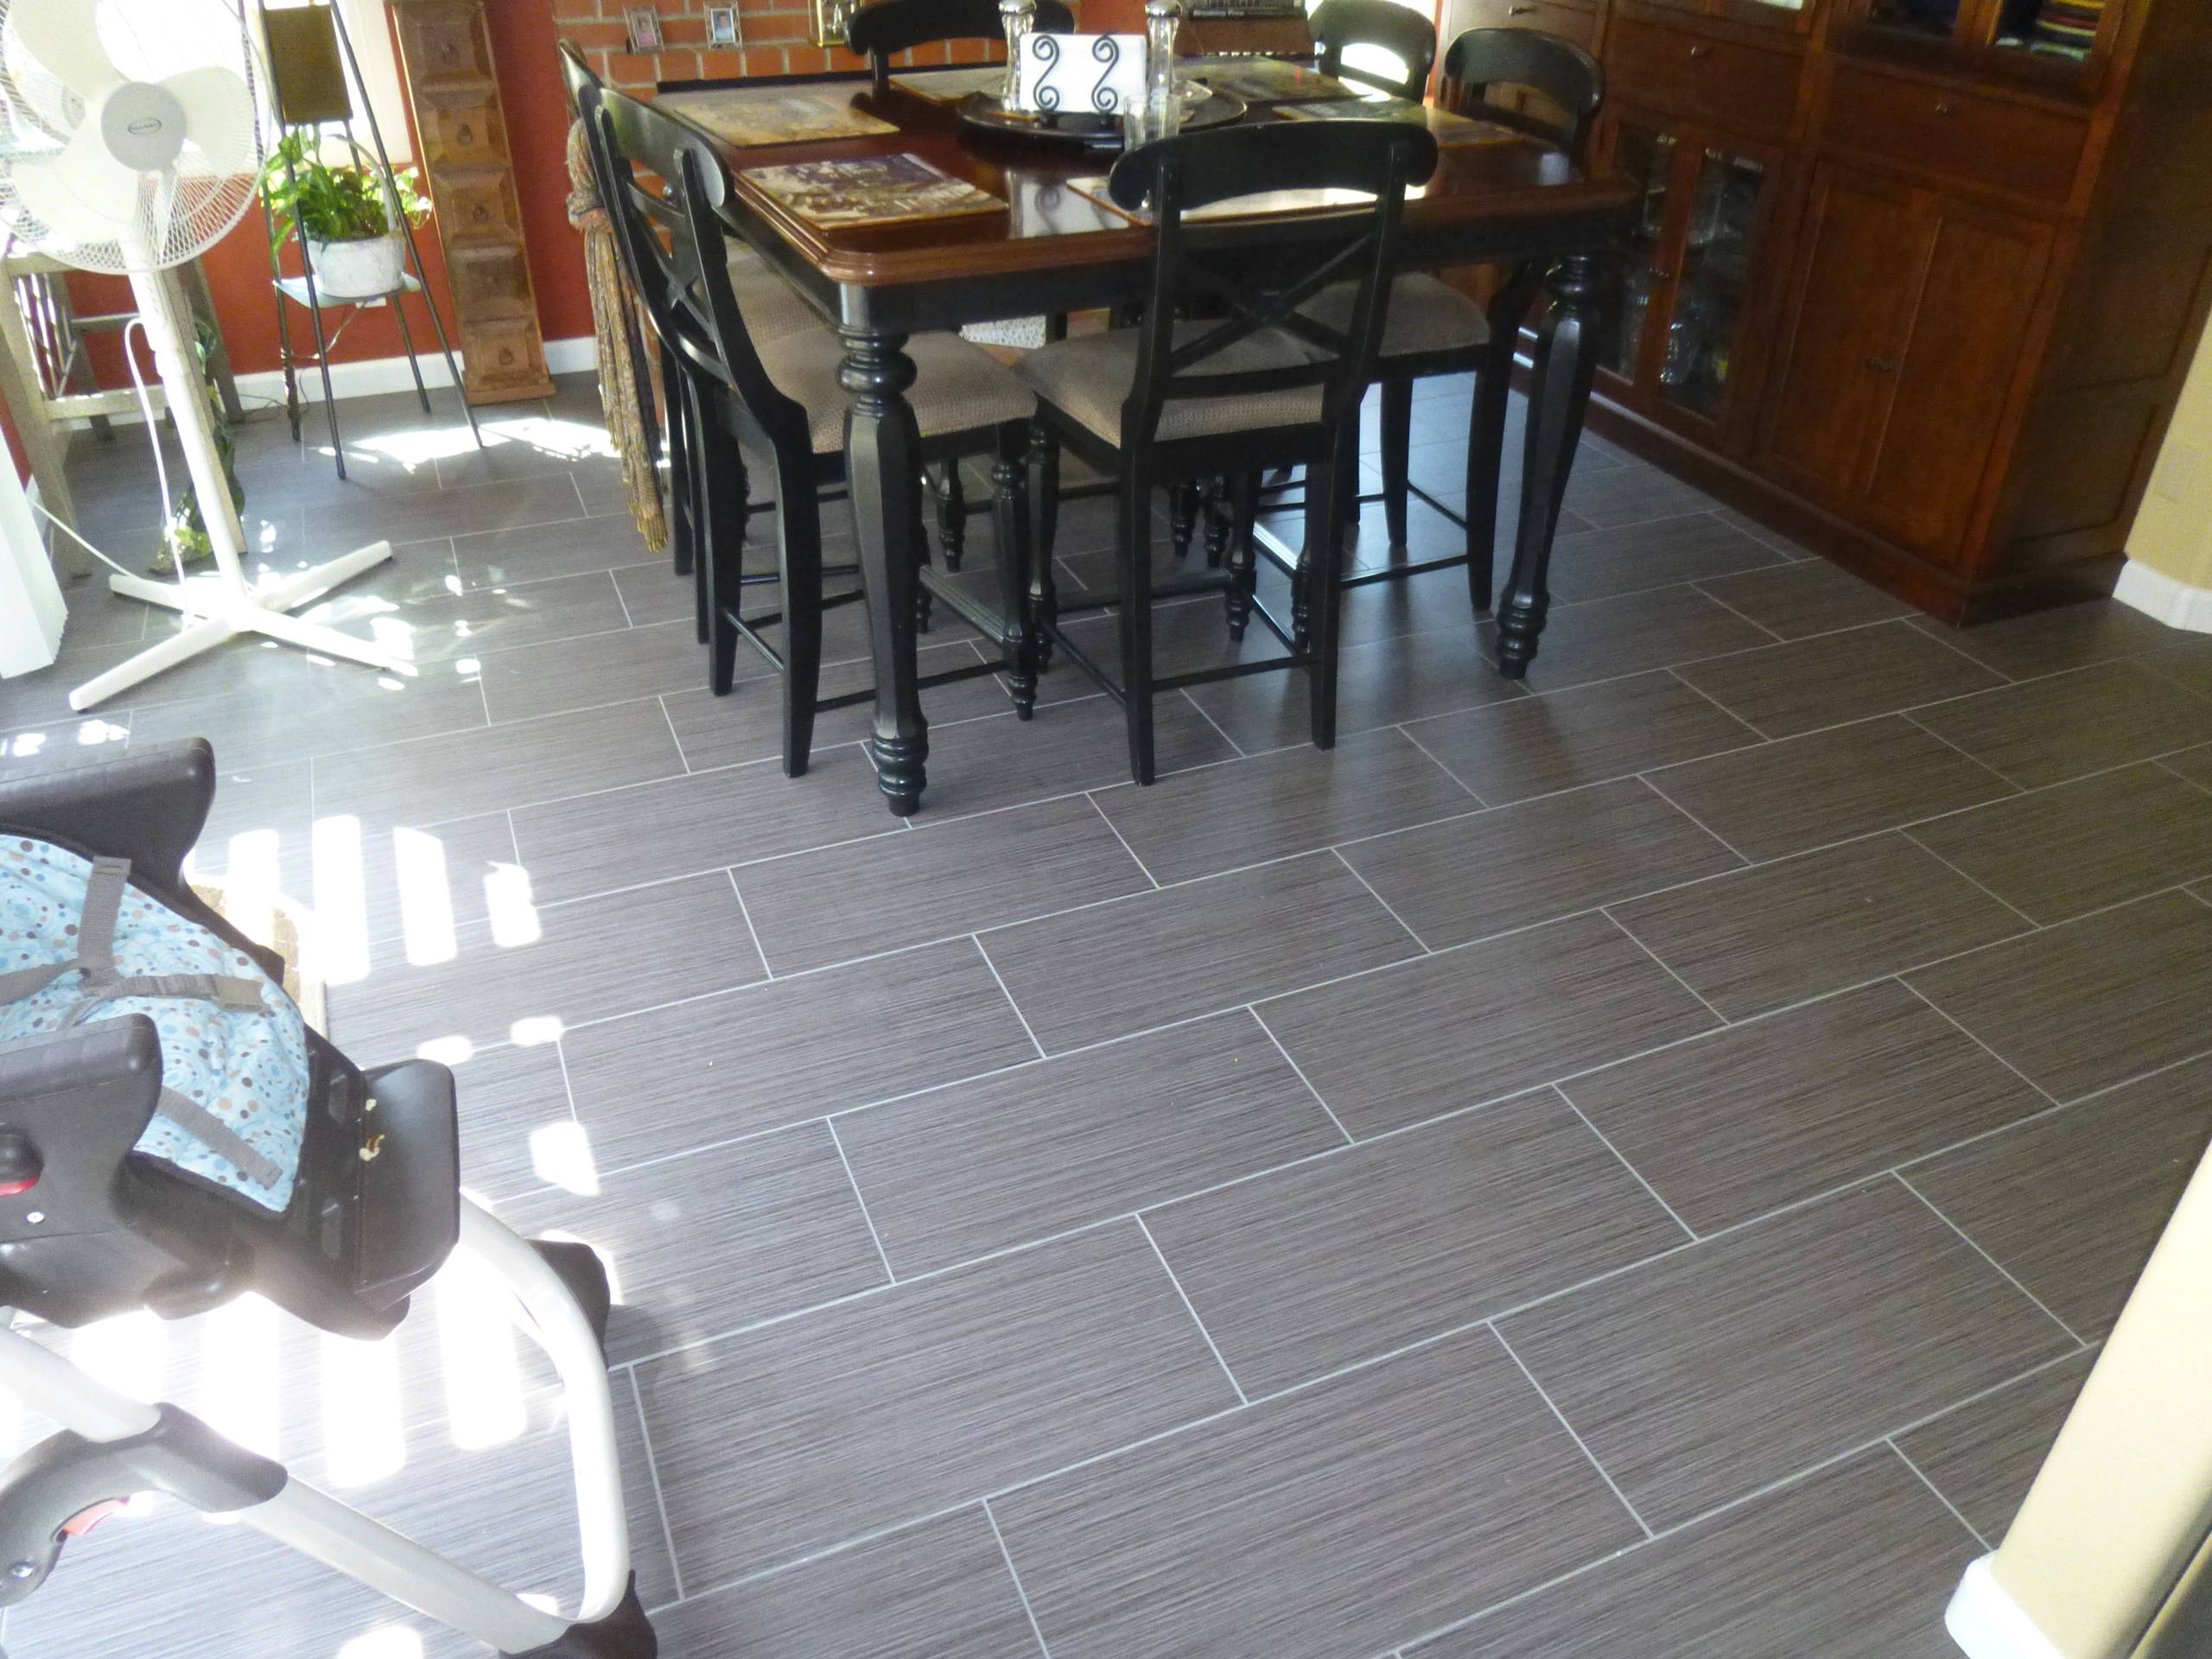 12 X 24 Porcelain Tile Flooring, 12 215 24 Floor Tile Layout Patterns 6 X